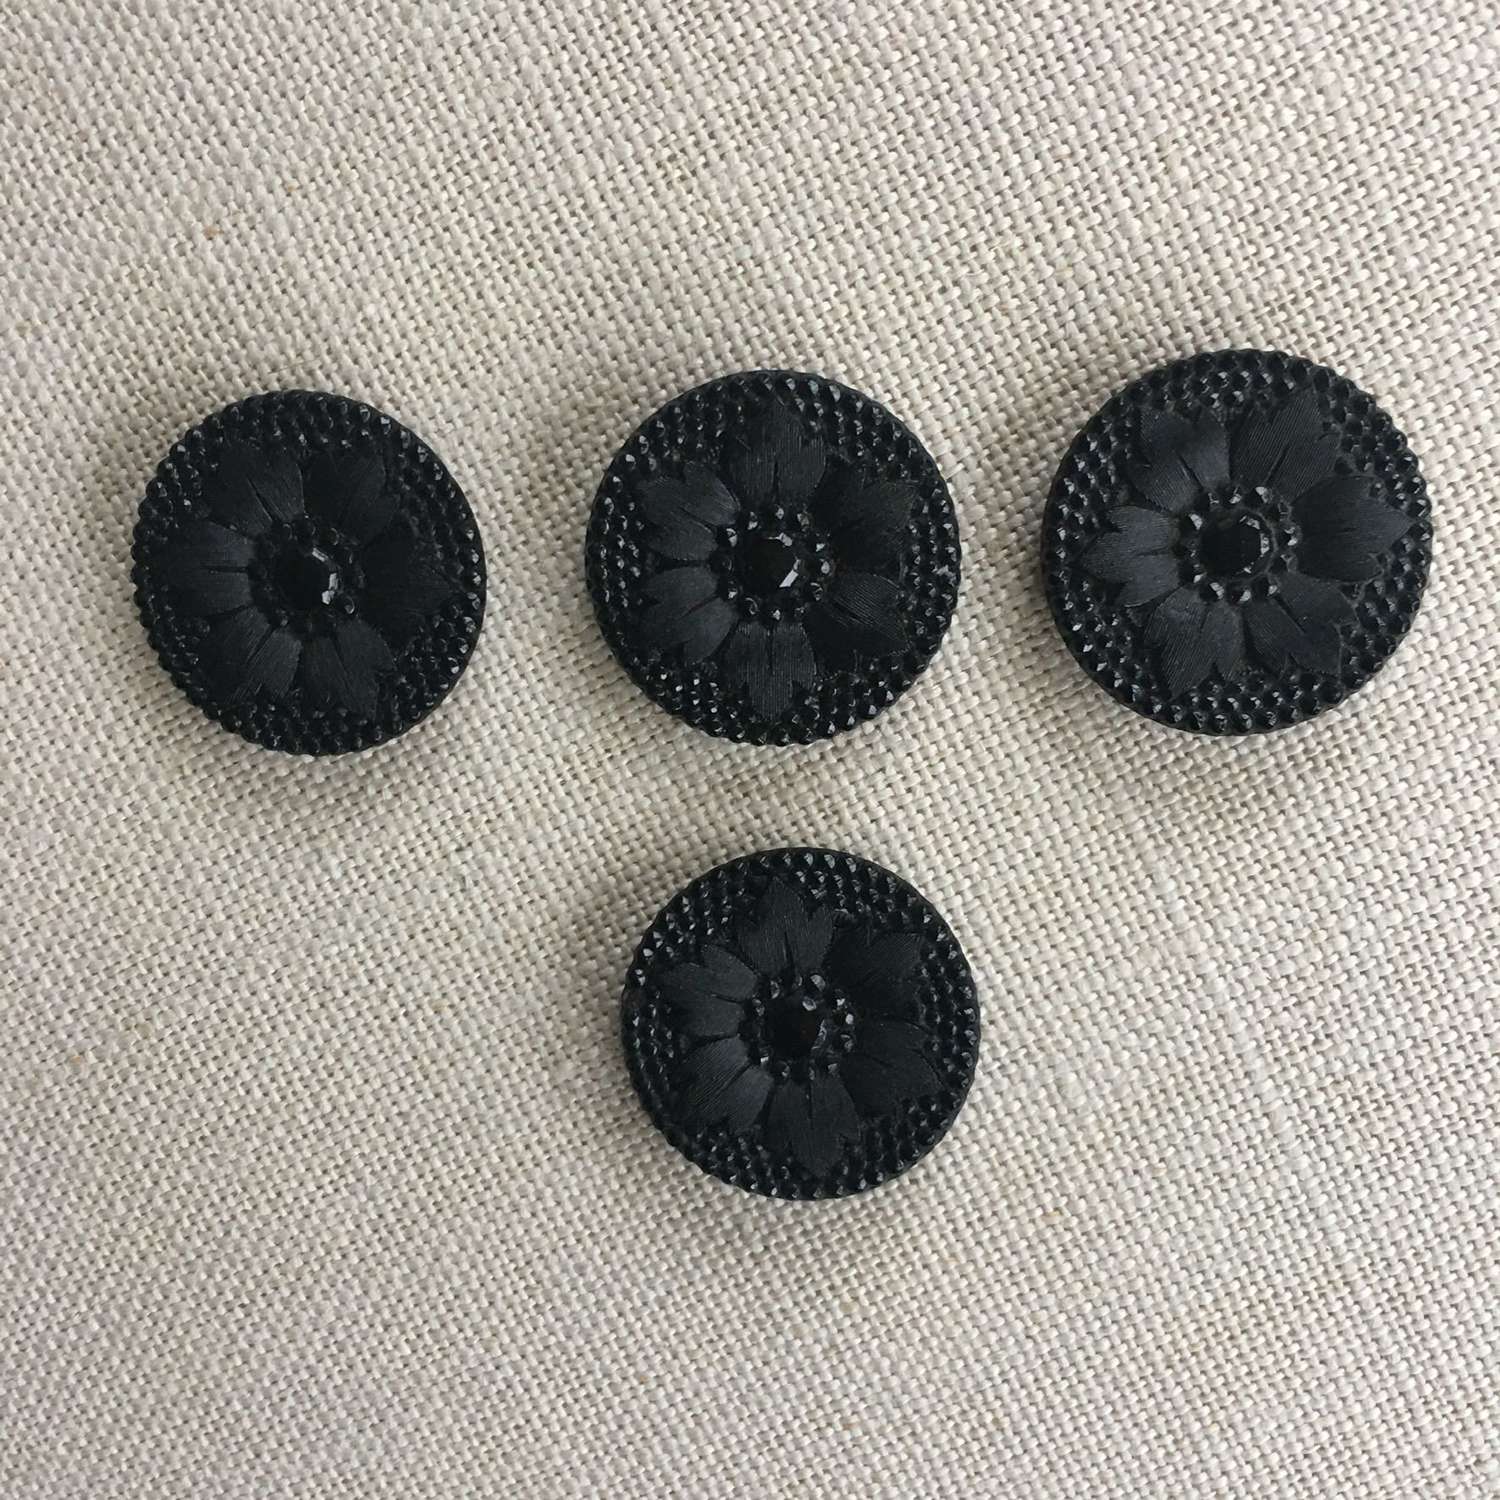 Four Victorian black flower buttons